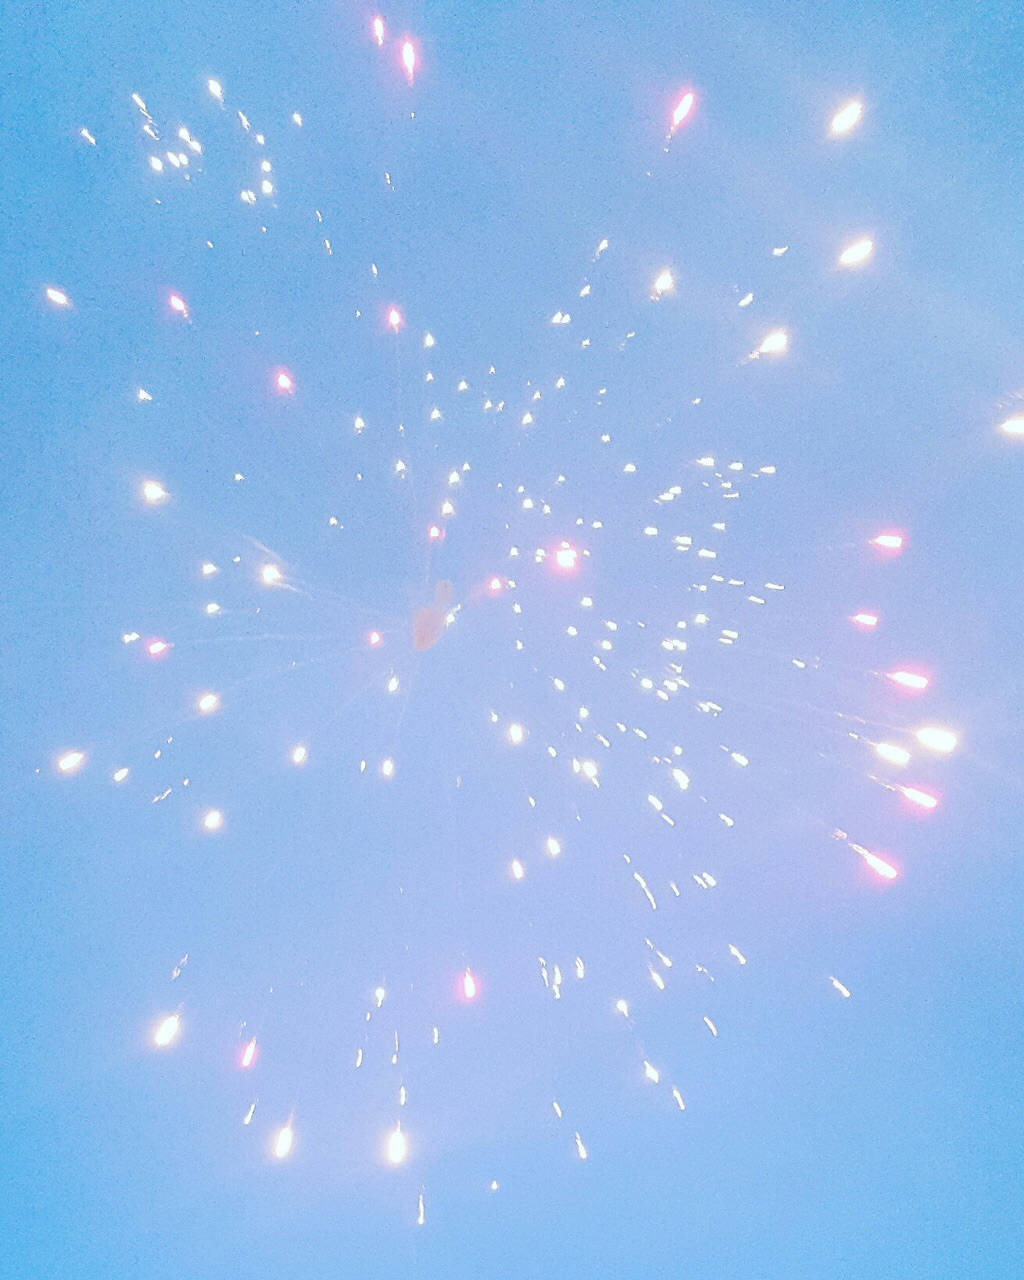 Simple Blue Aesthetic Fireworks Display